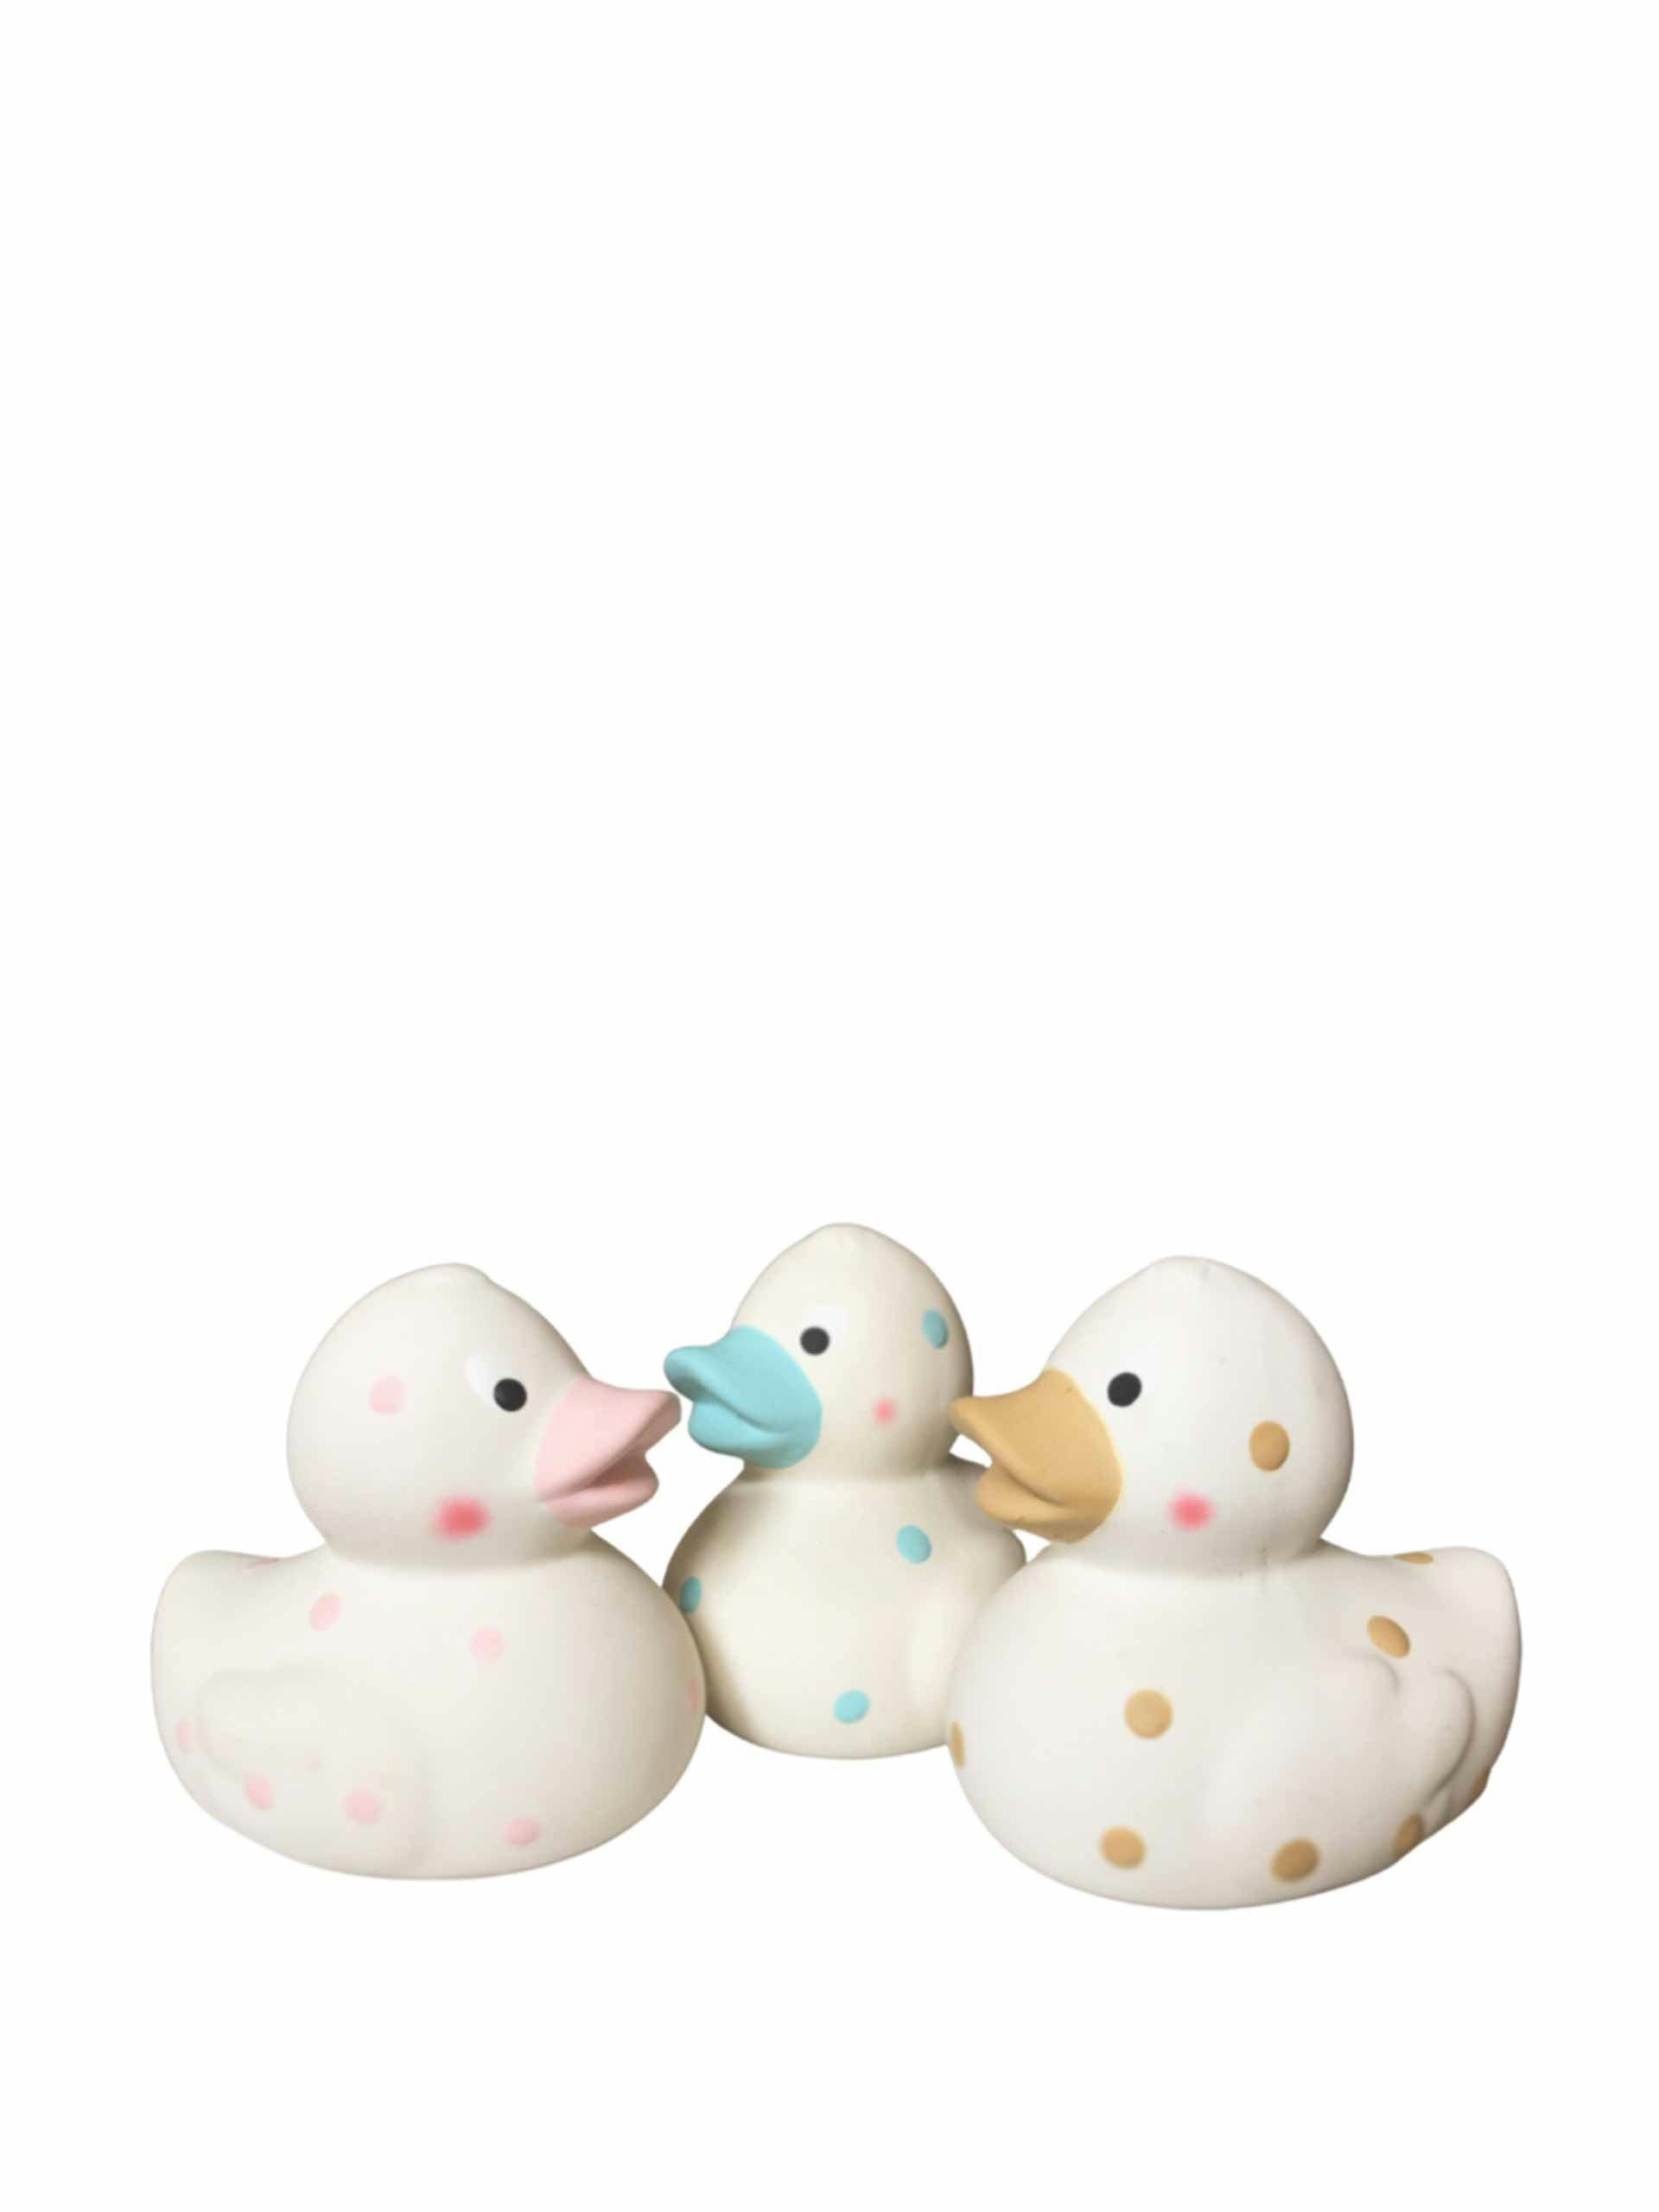 Polka dotted duck bath toys